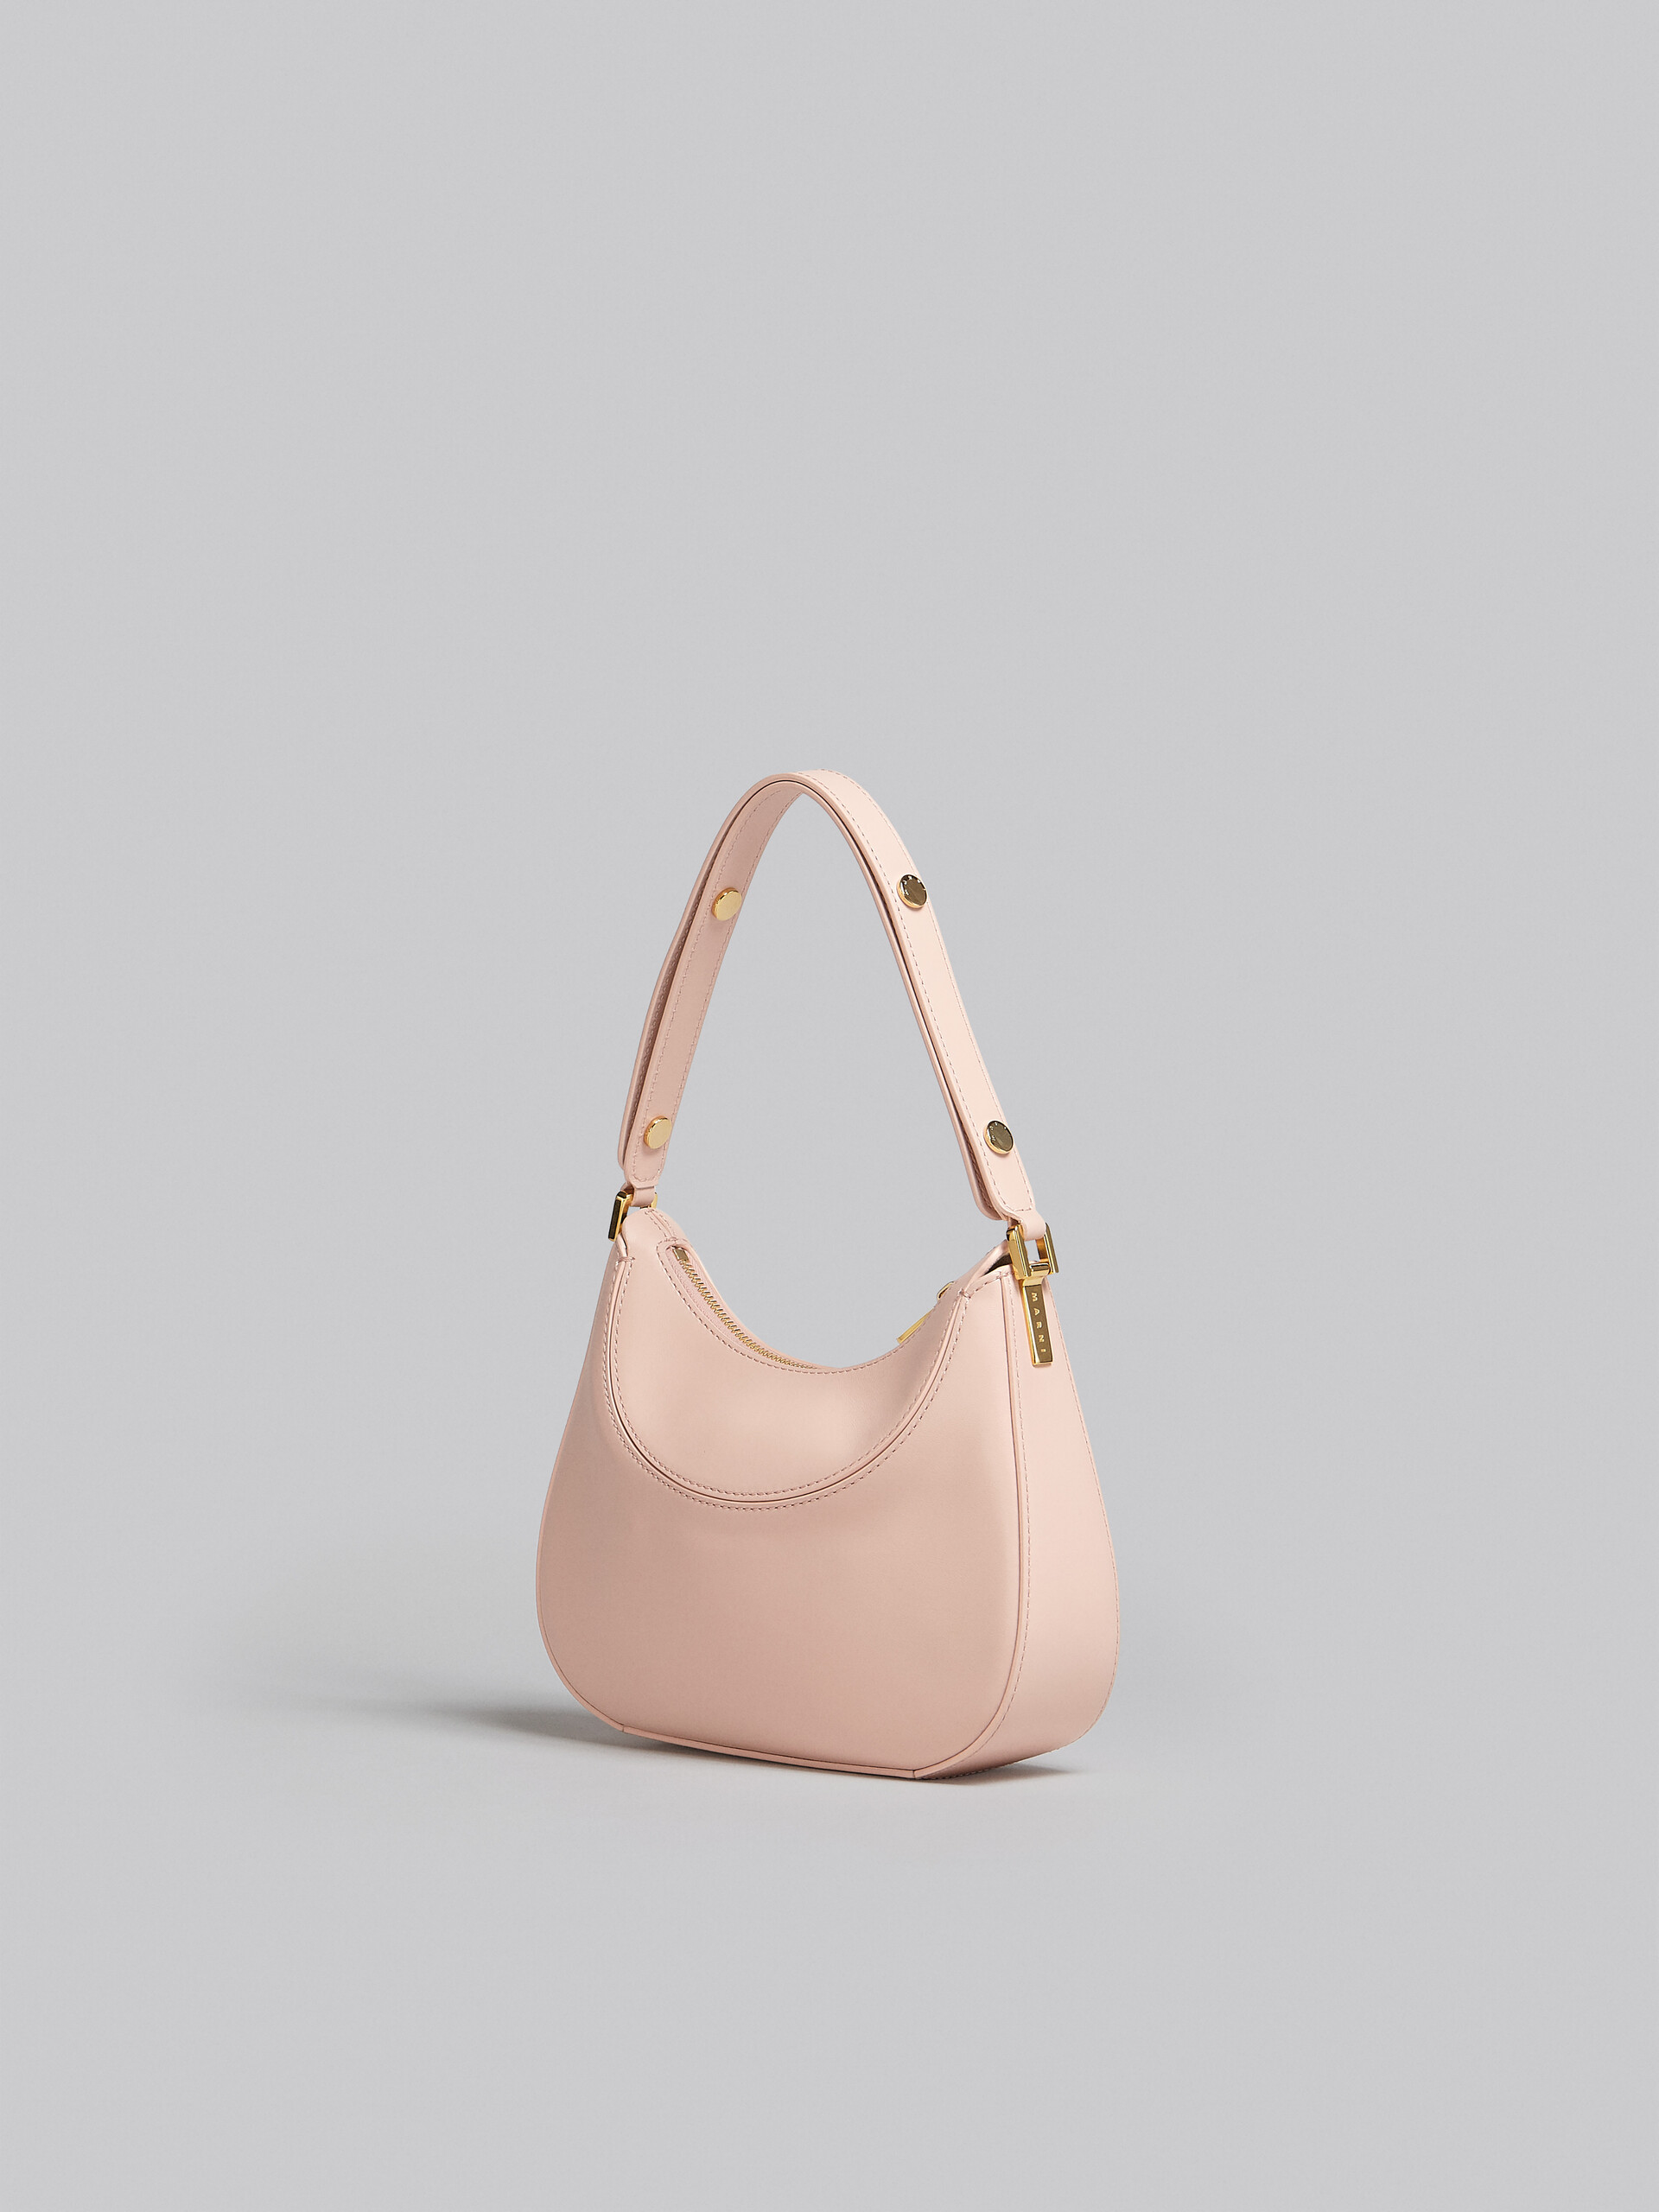 Milano Mini Bag in pink leather - Handbag - Image 2